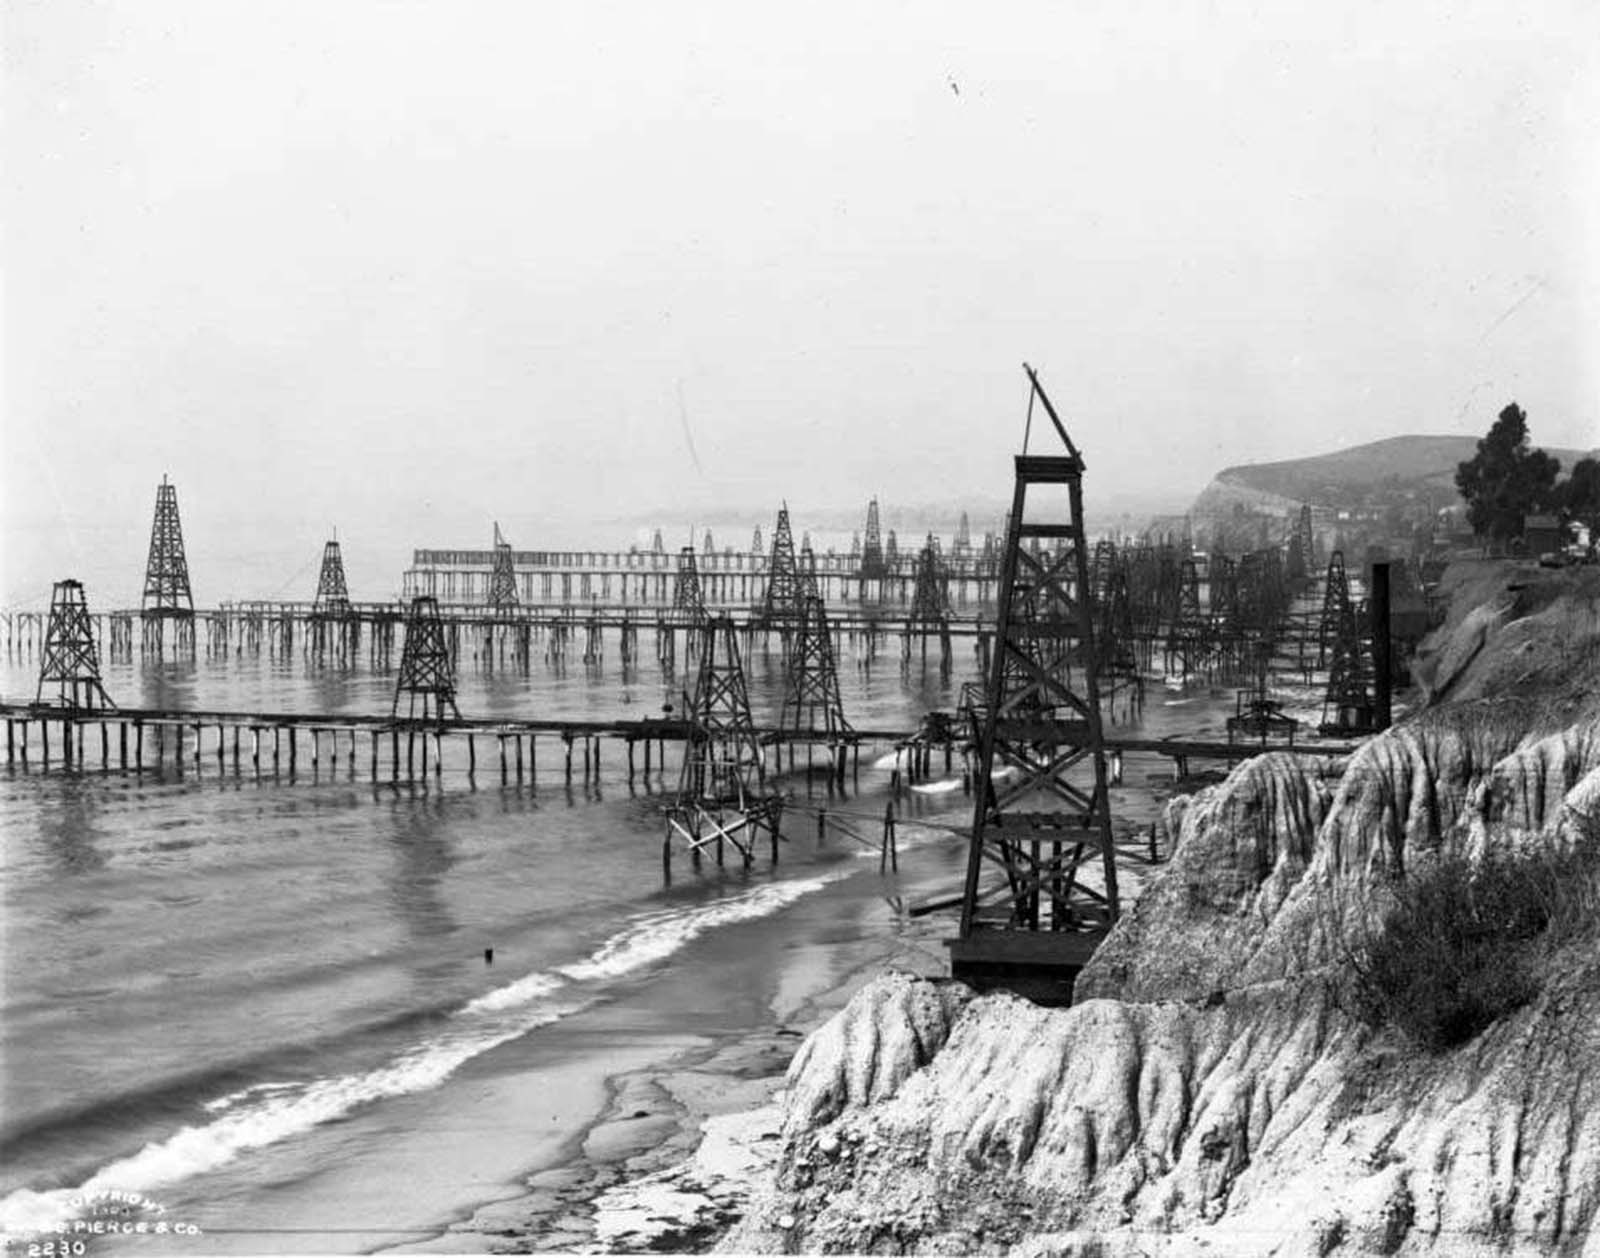 Oil derricks extending into the Pacific at Summerland Beach near Santa Barbara, 1903.